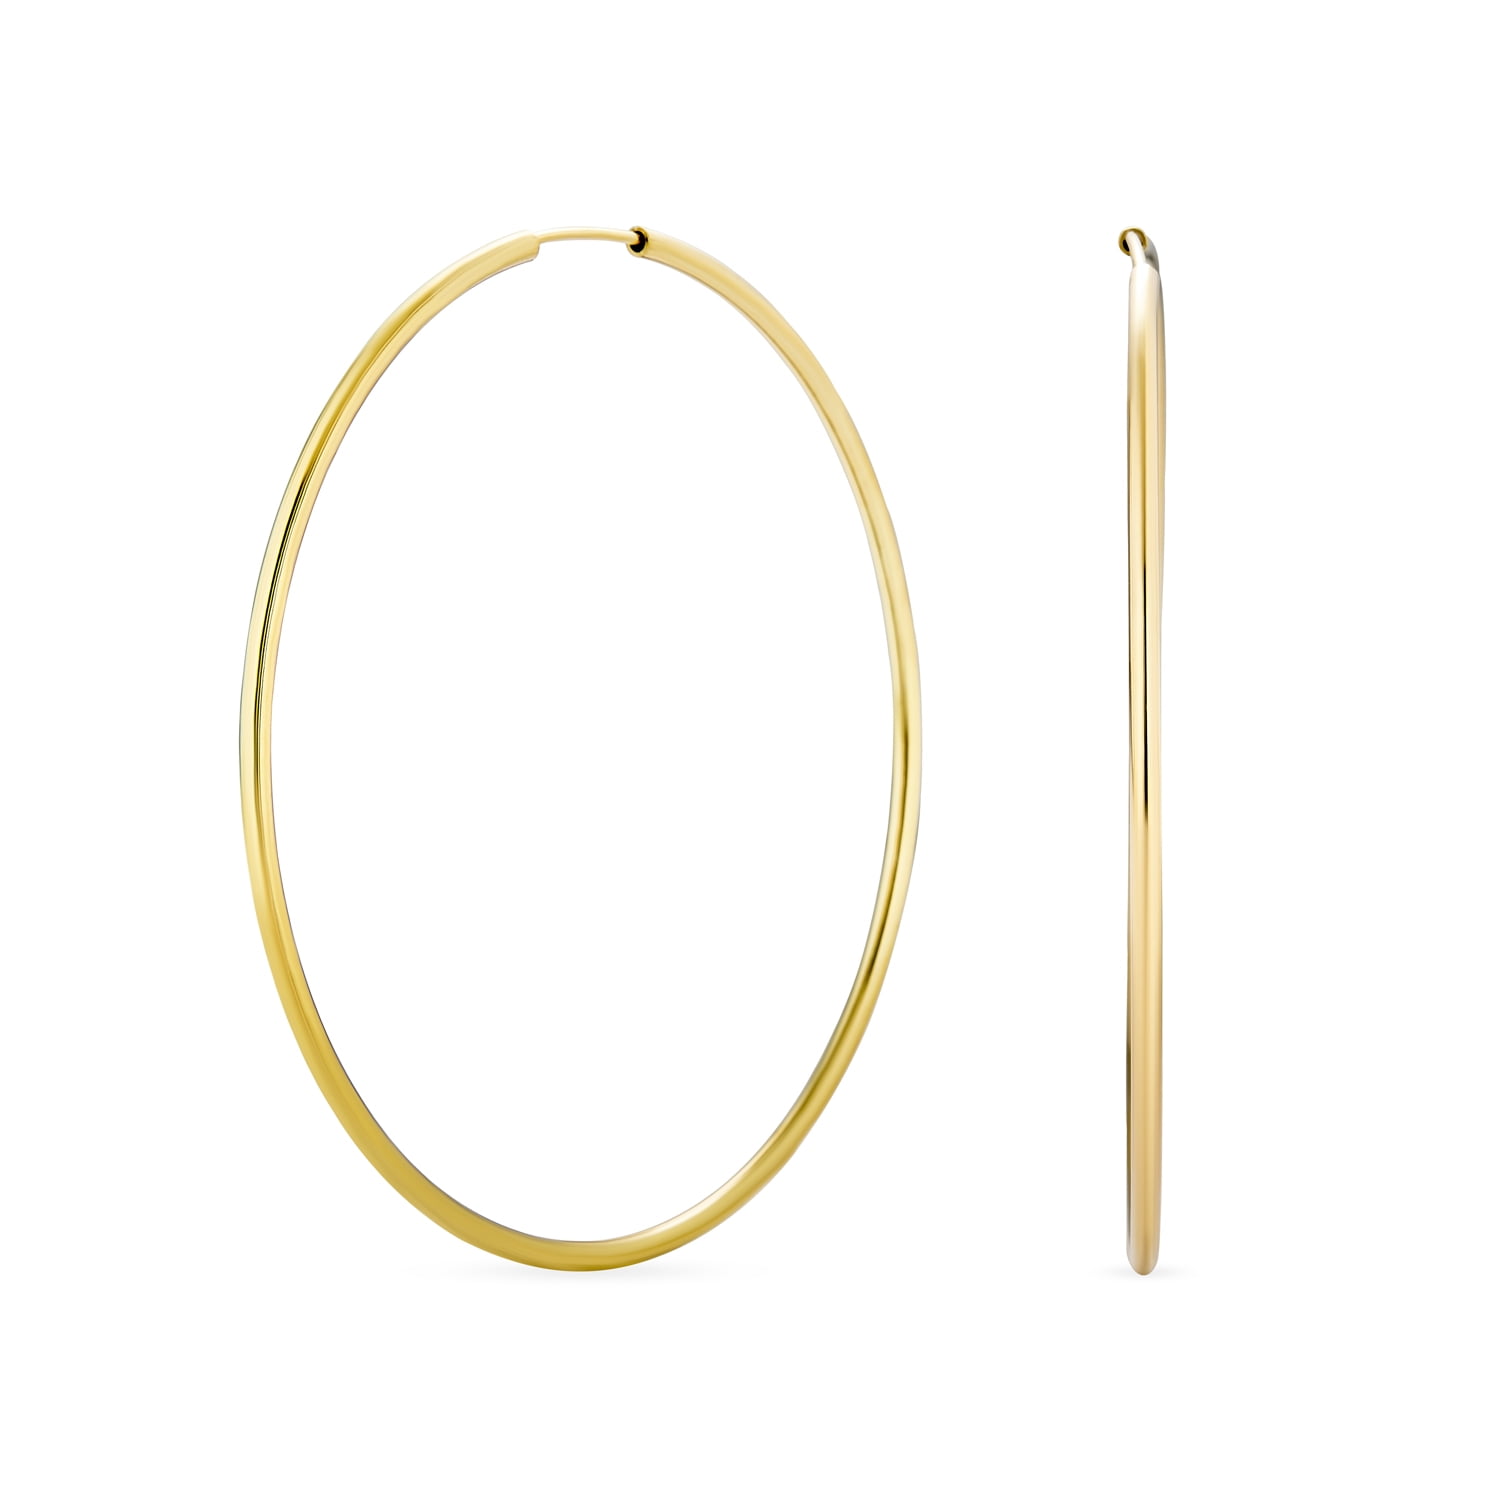 5 Carat VS Diamond Hoop Earrings for Women 14K Yellow Gold 2.5in Inside Out  Design 001285